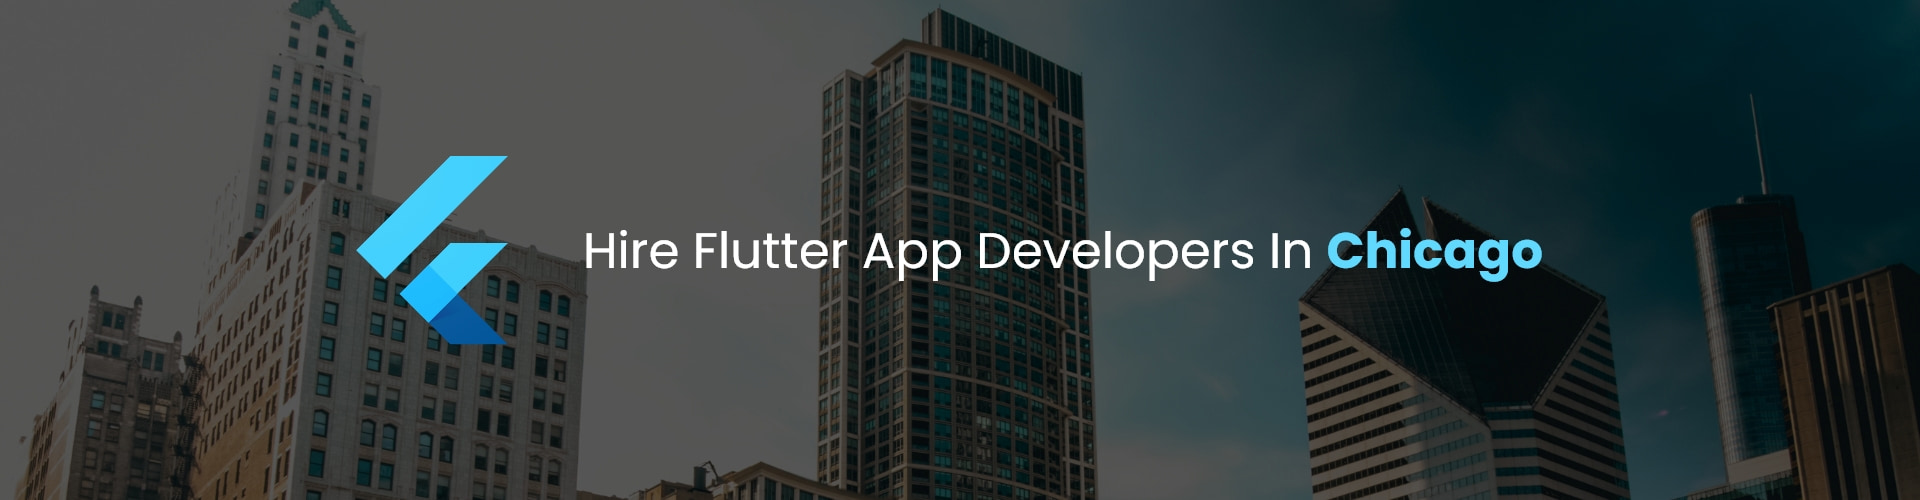 hire flutter app developers in chicago